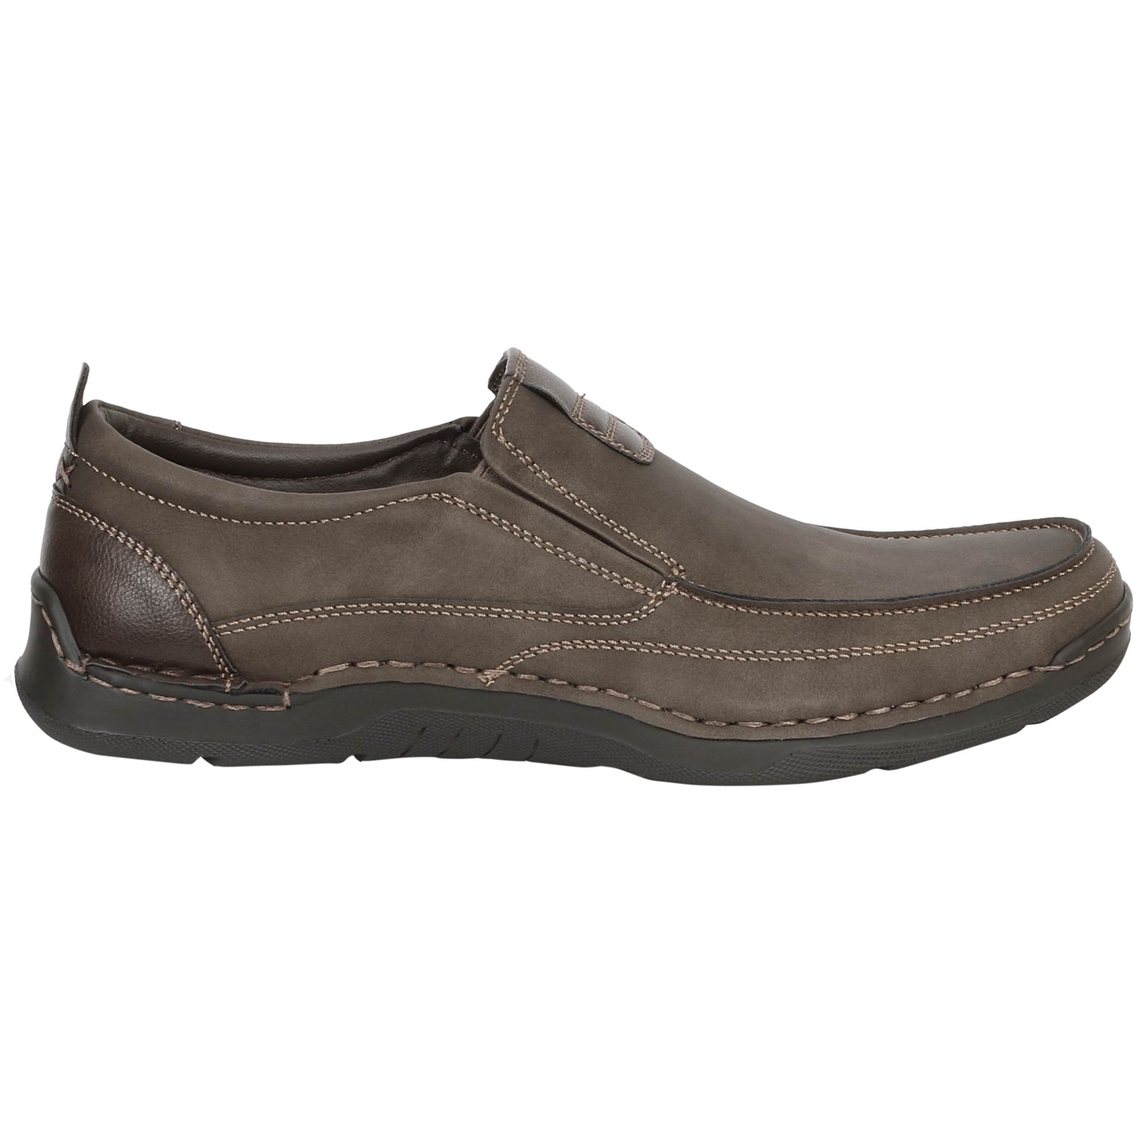 Izod Men's Forman Double Gore Slip-on Shoes | Casual Shoes | Shoes ...